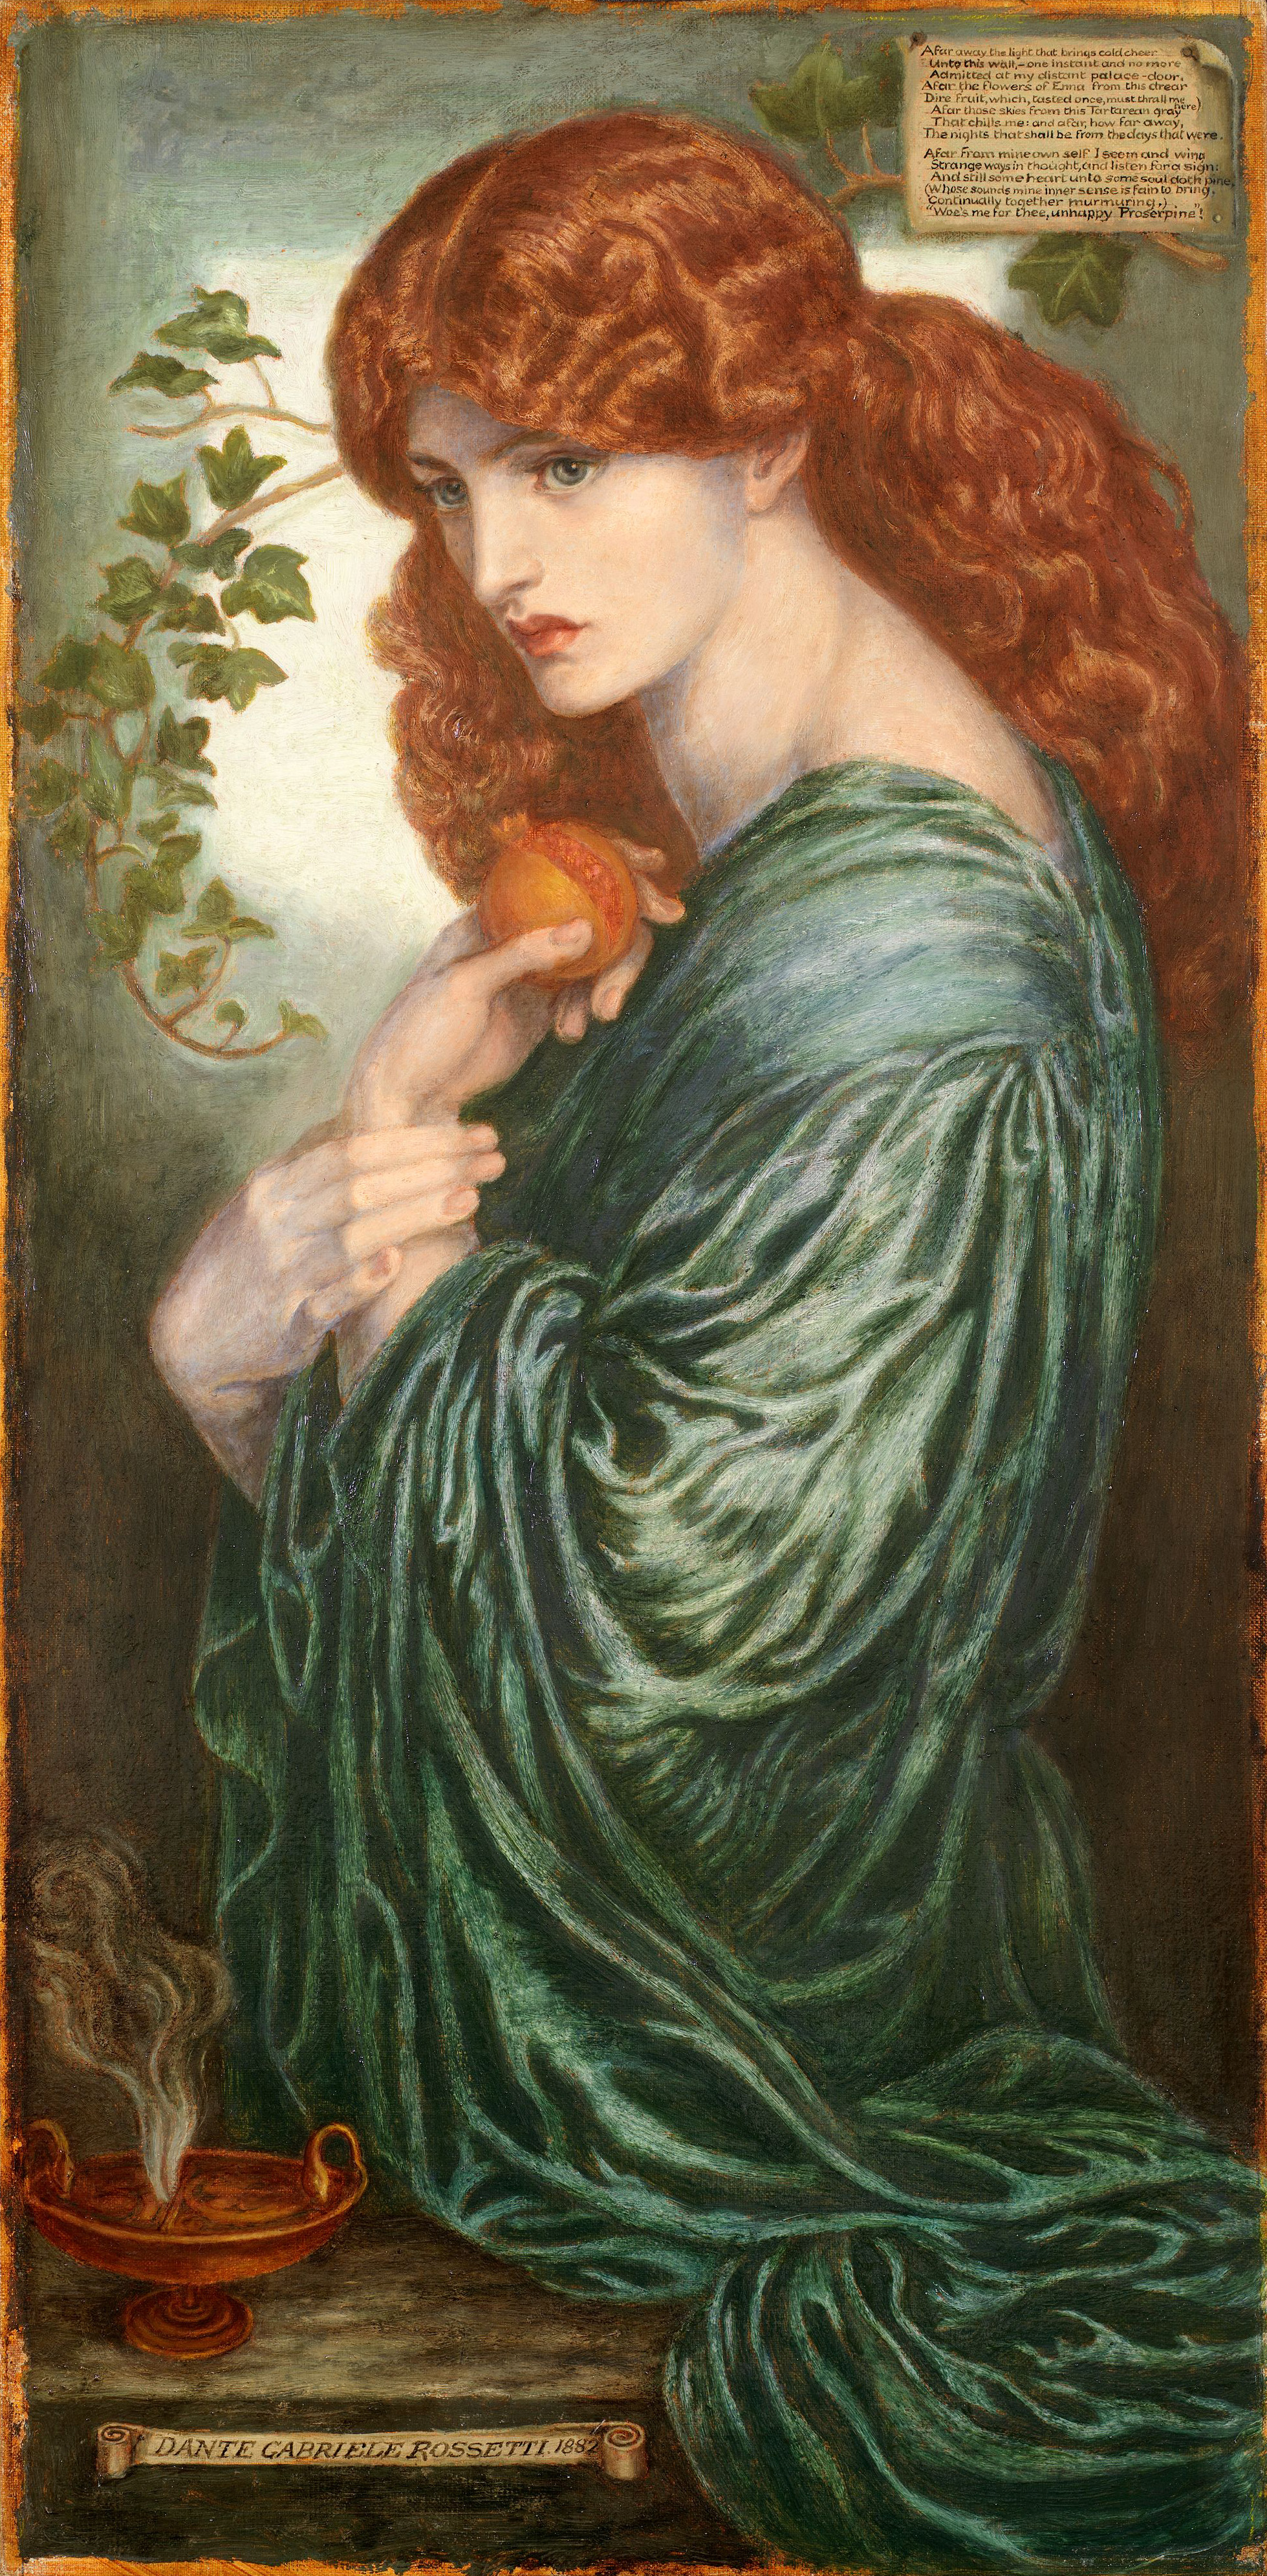 Dante Gabriel Rossetti, Proserpine, 1874, Tate, London, UK.